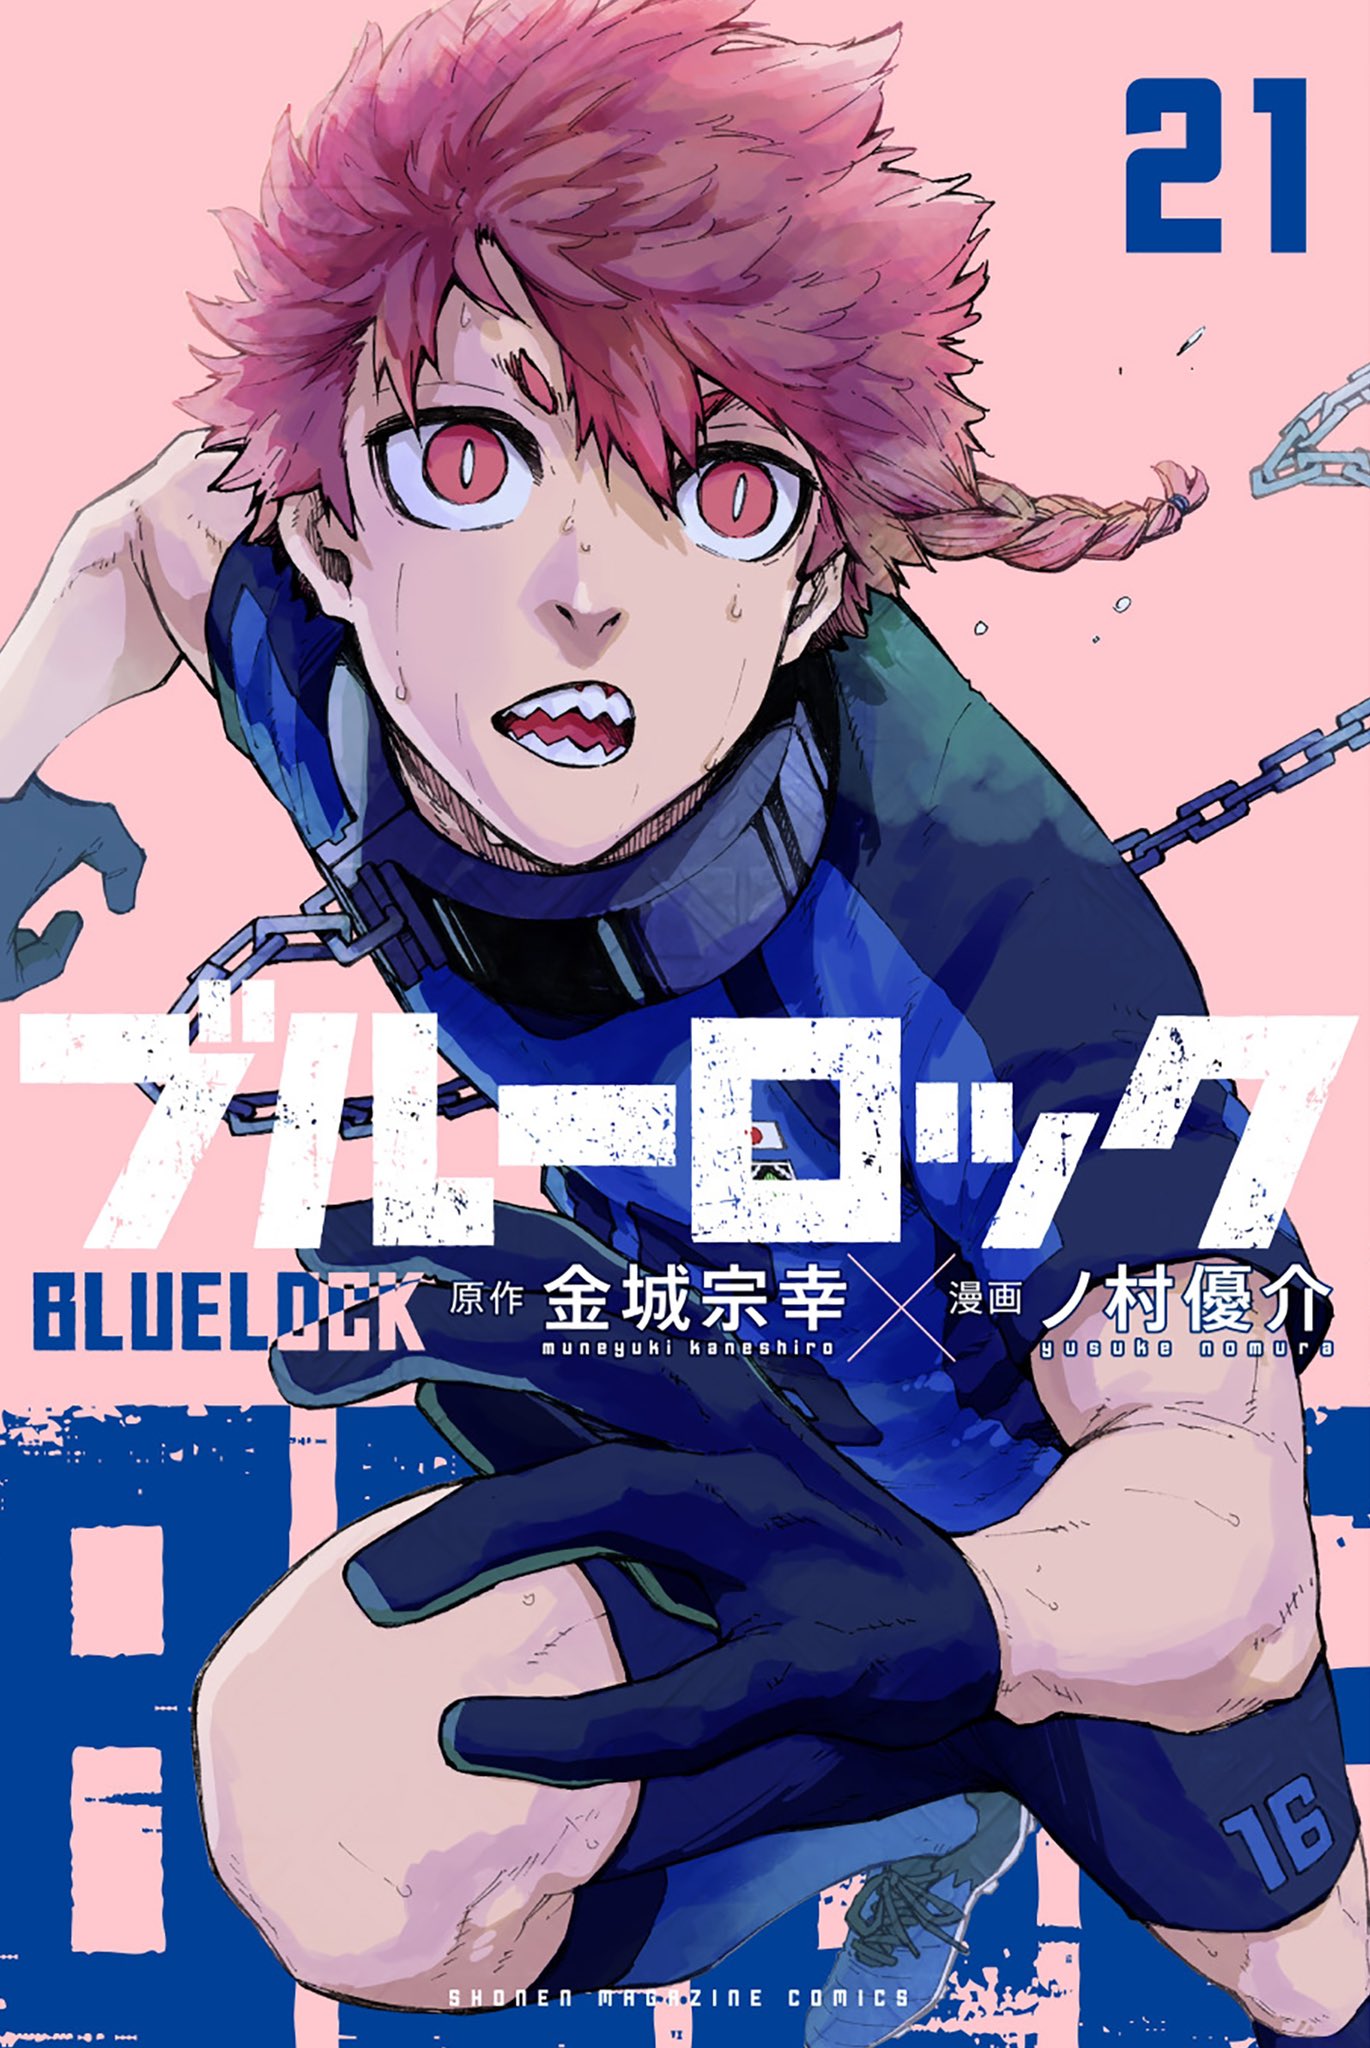 1  Chapter 237 - Blue Lock - MangaDex